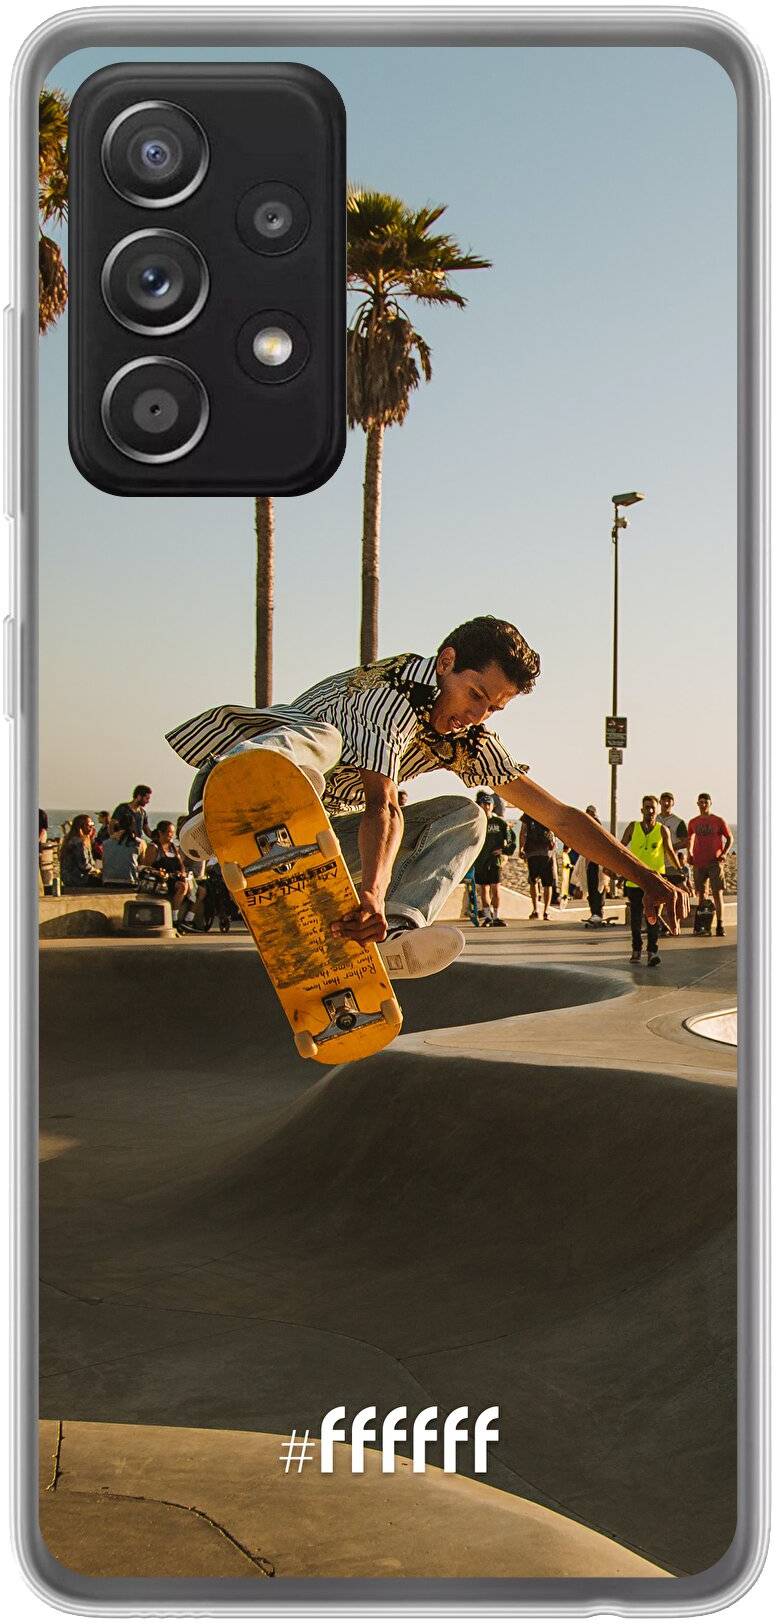 Let's Skate Galaxy A52